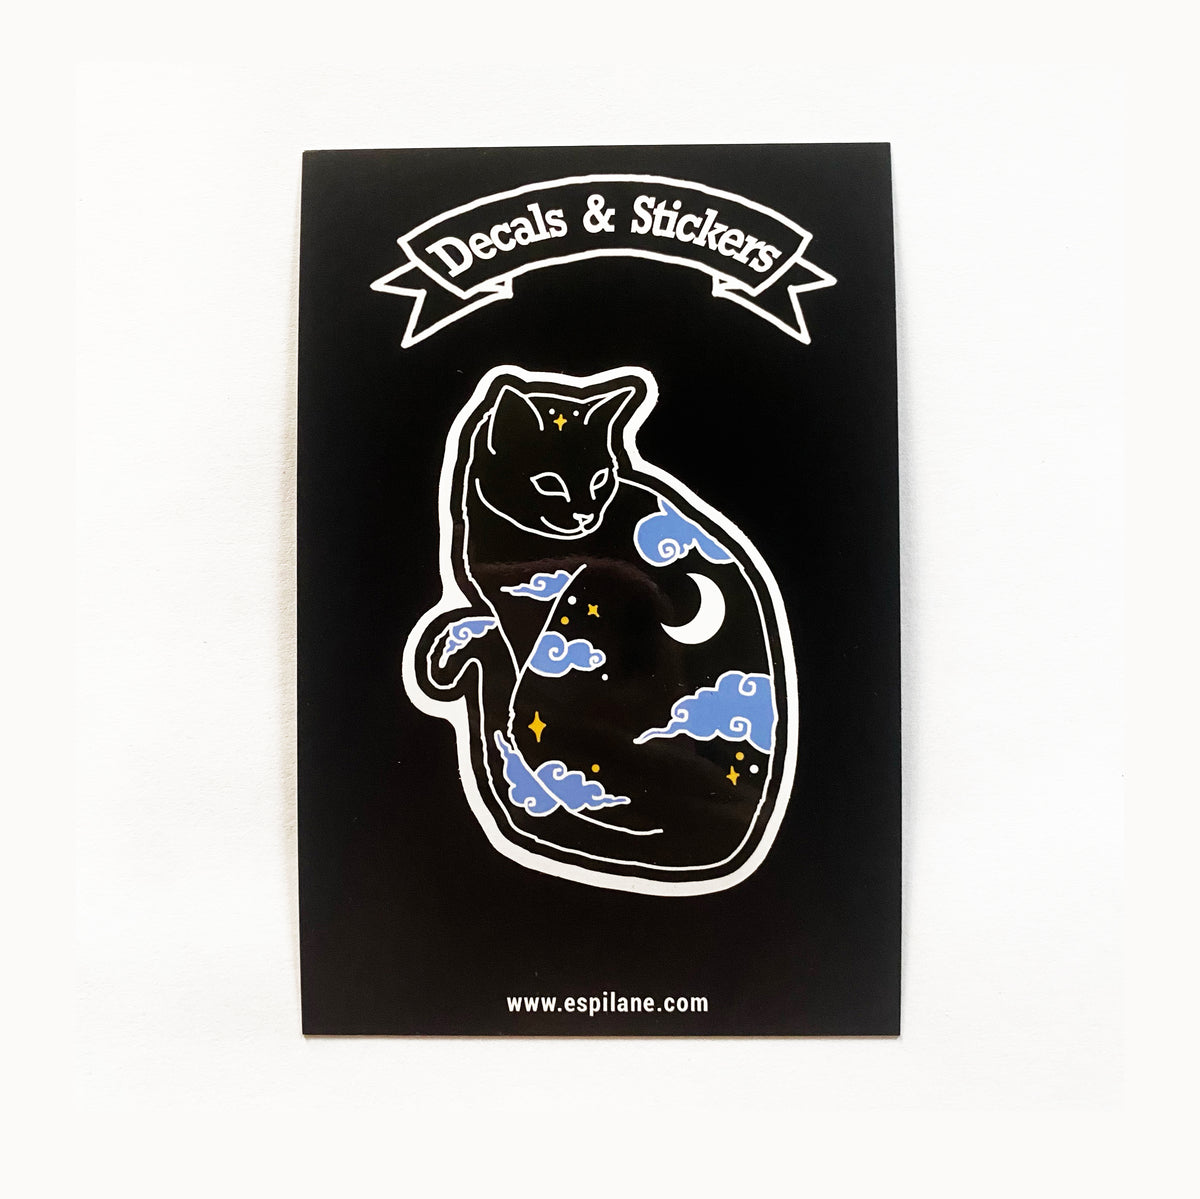 Celestial Black Cat Decal Vinyl Sticker